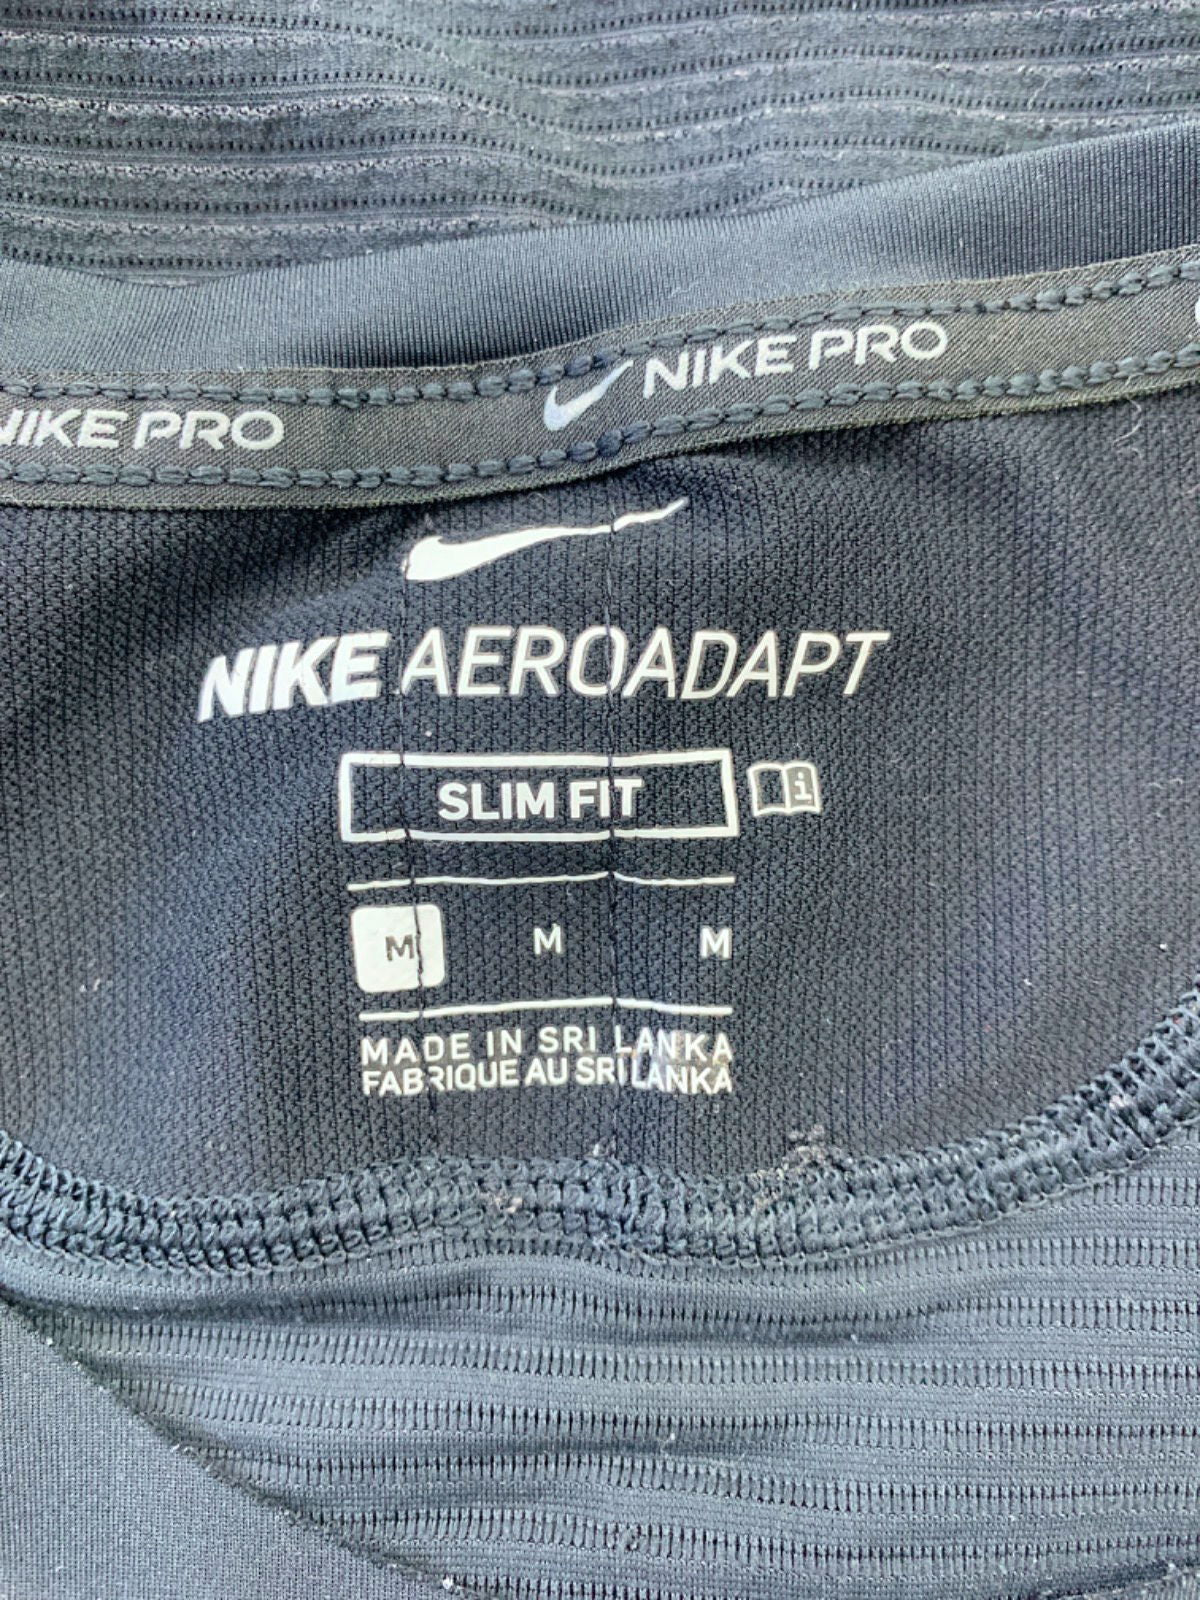 Nike Black Aeroadapt Slim Fit Tank Top M